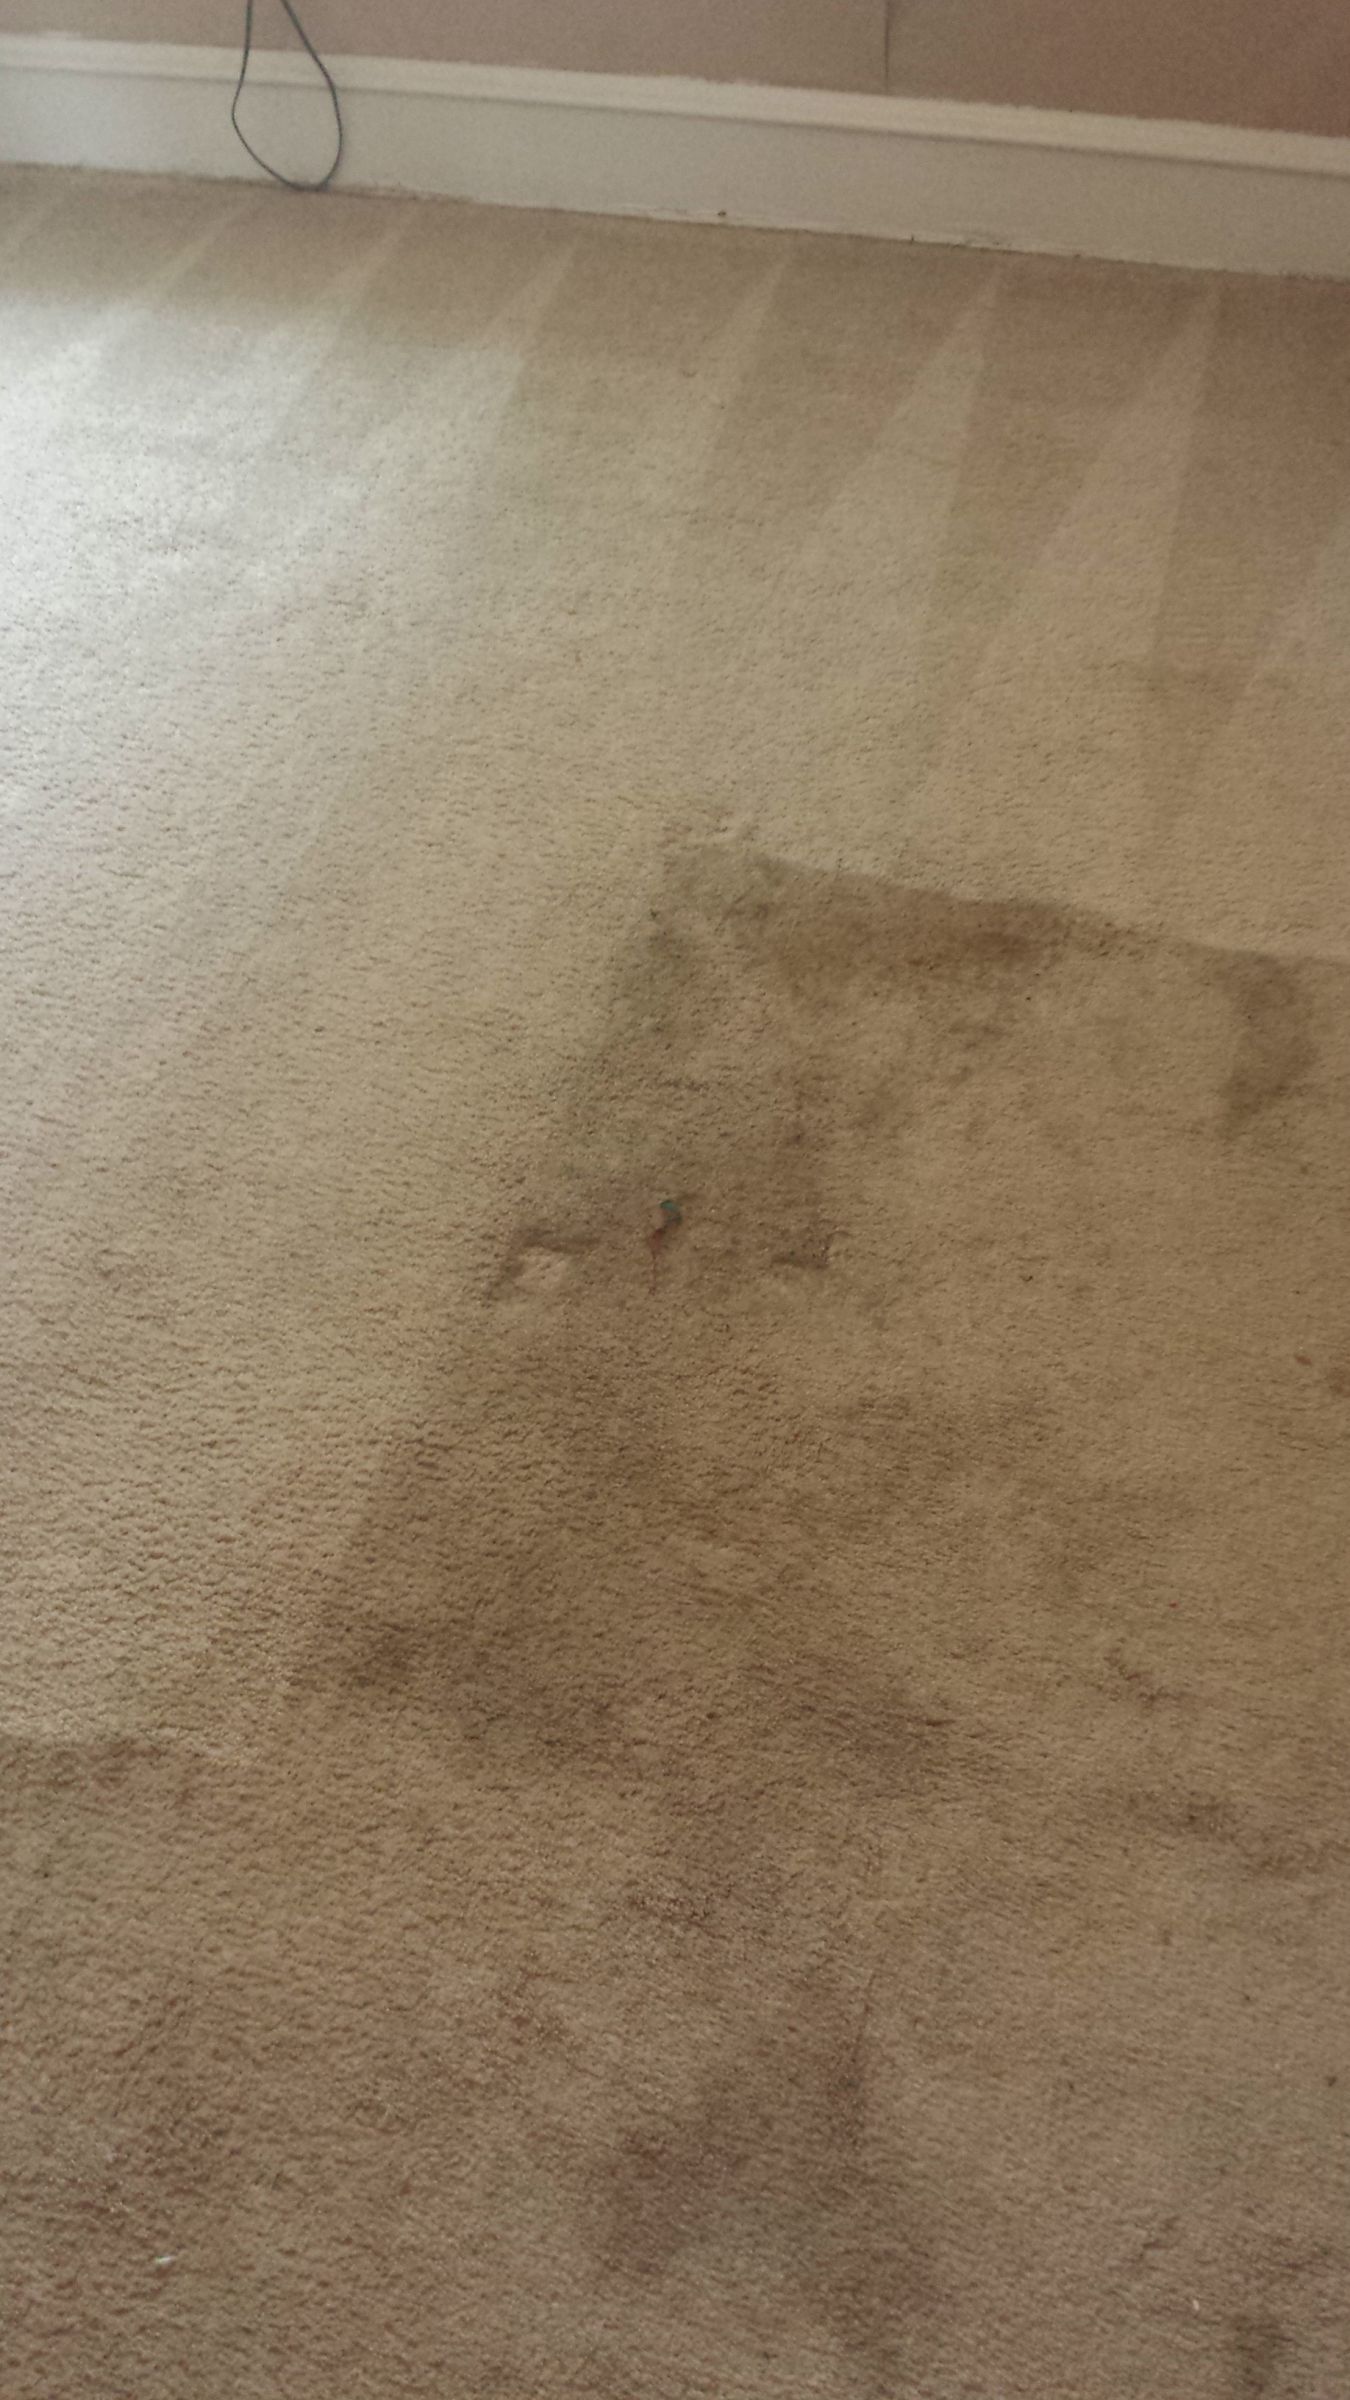 Haddonfield Carpet Cleaning